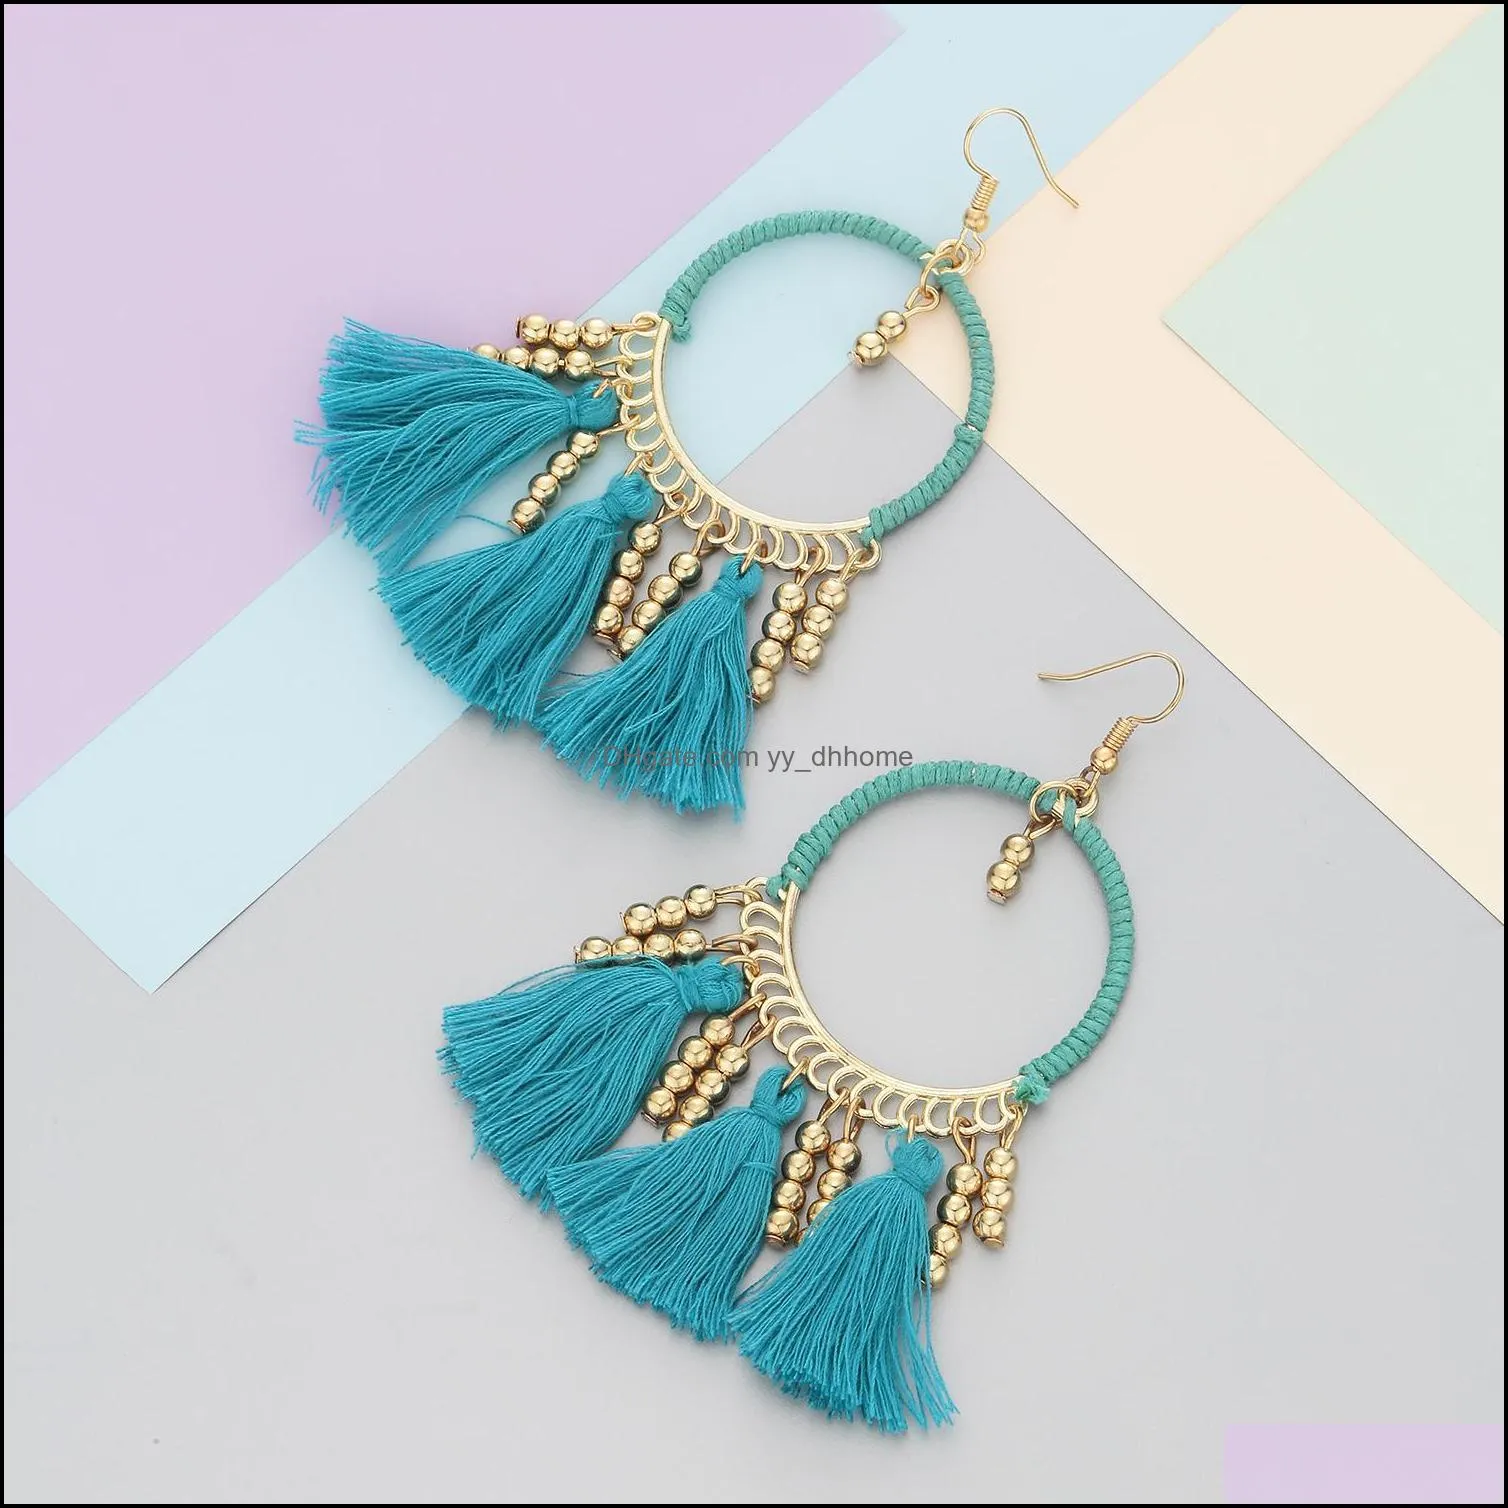 bohemian earrings thread beaded tassel fringe drop dangle gifts for women daily jewelry 5 color